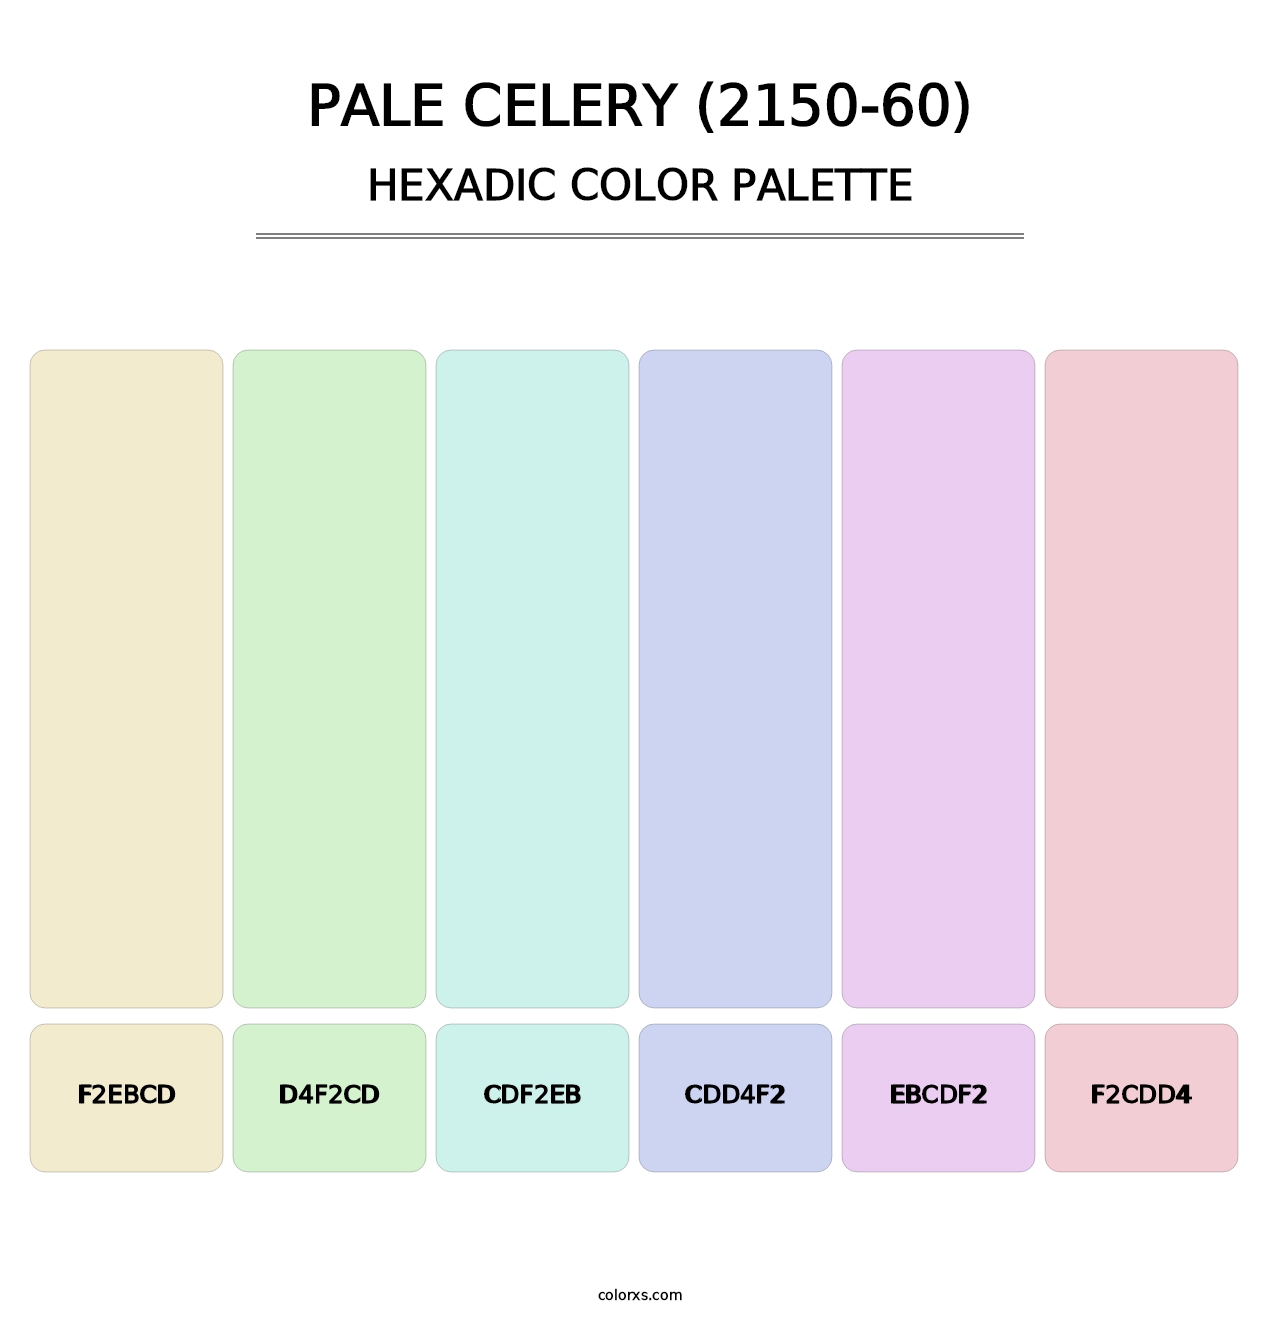 Pale Celery (2150-60) - Hexadic Color Palette